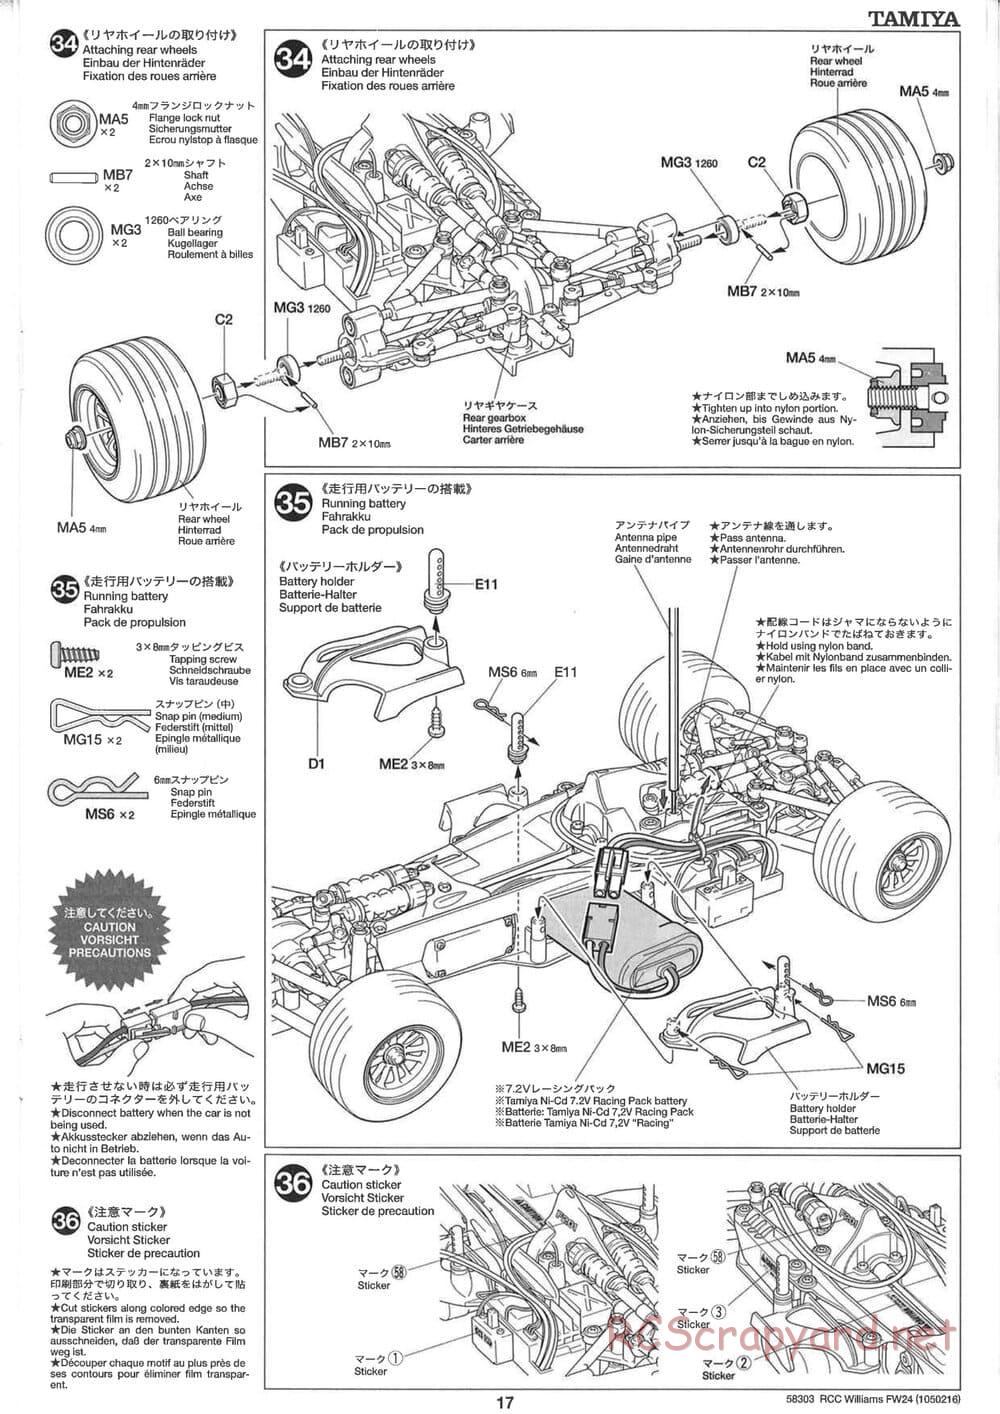 Tamiya - Williams F1 BMW FW24 - F201 Chassis - Manual - Page 17